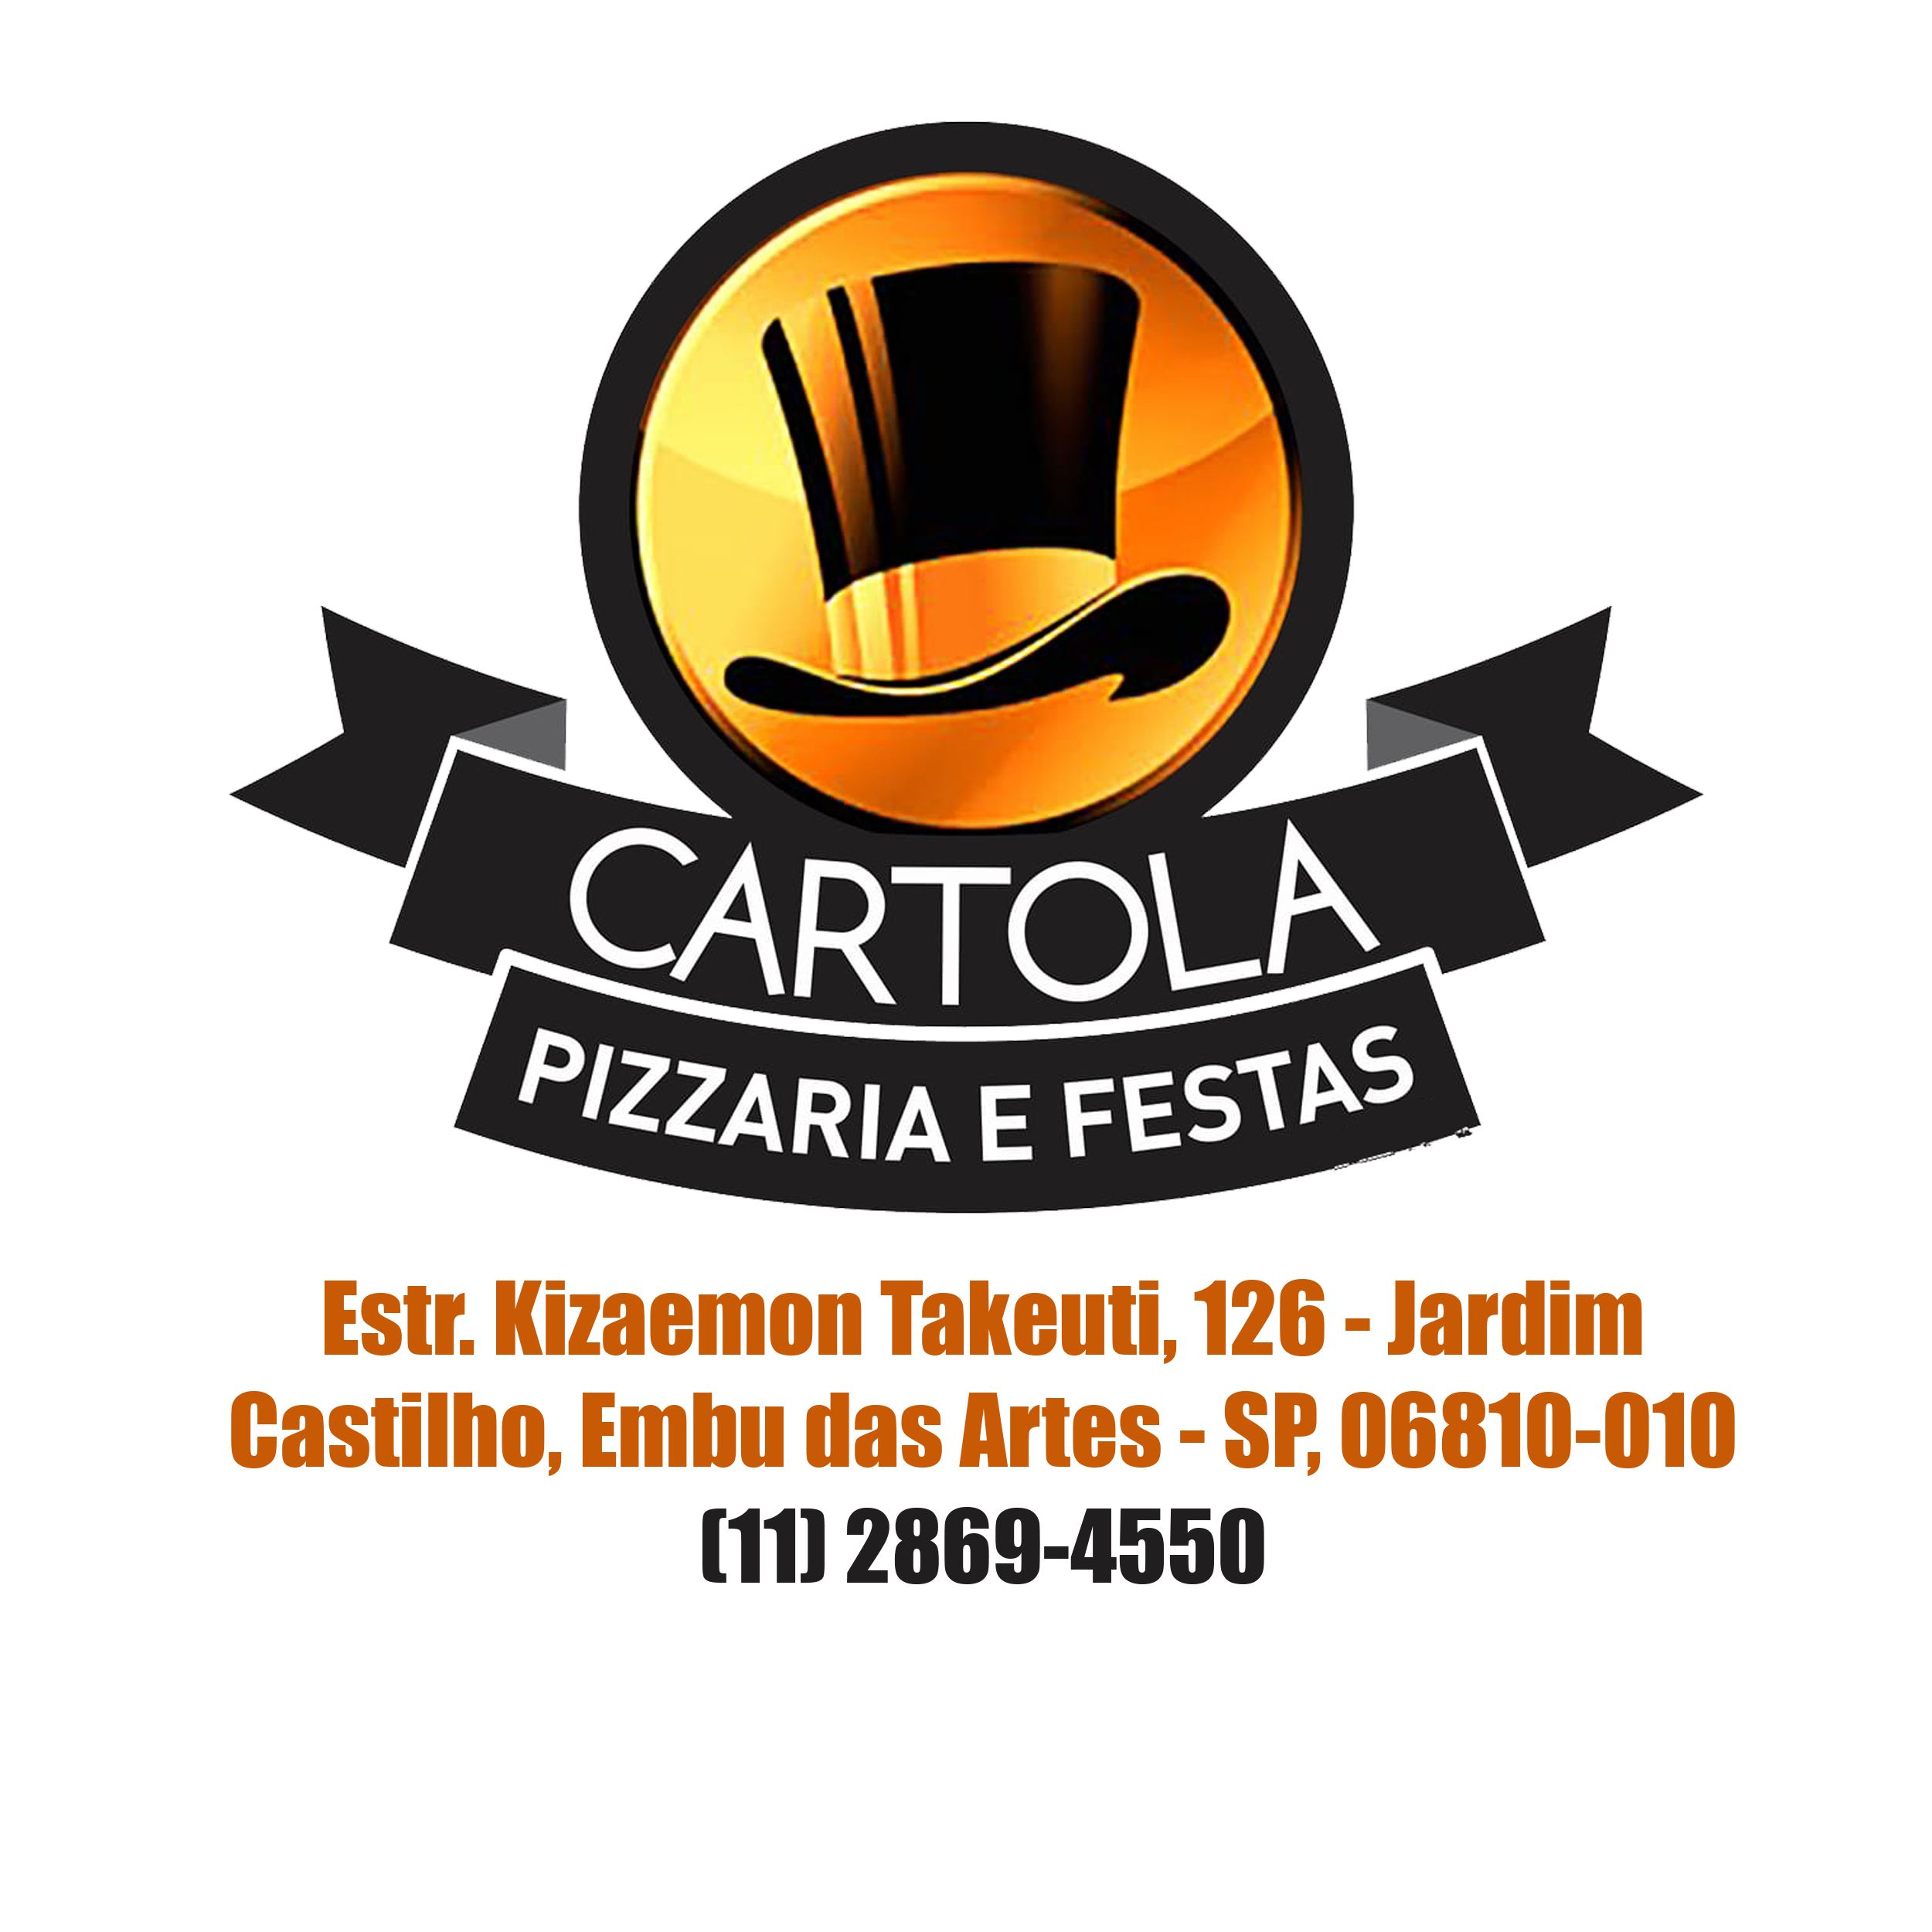 Cartola Pizzaria